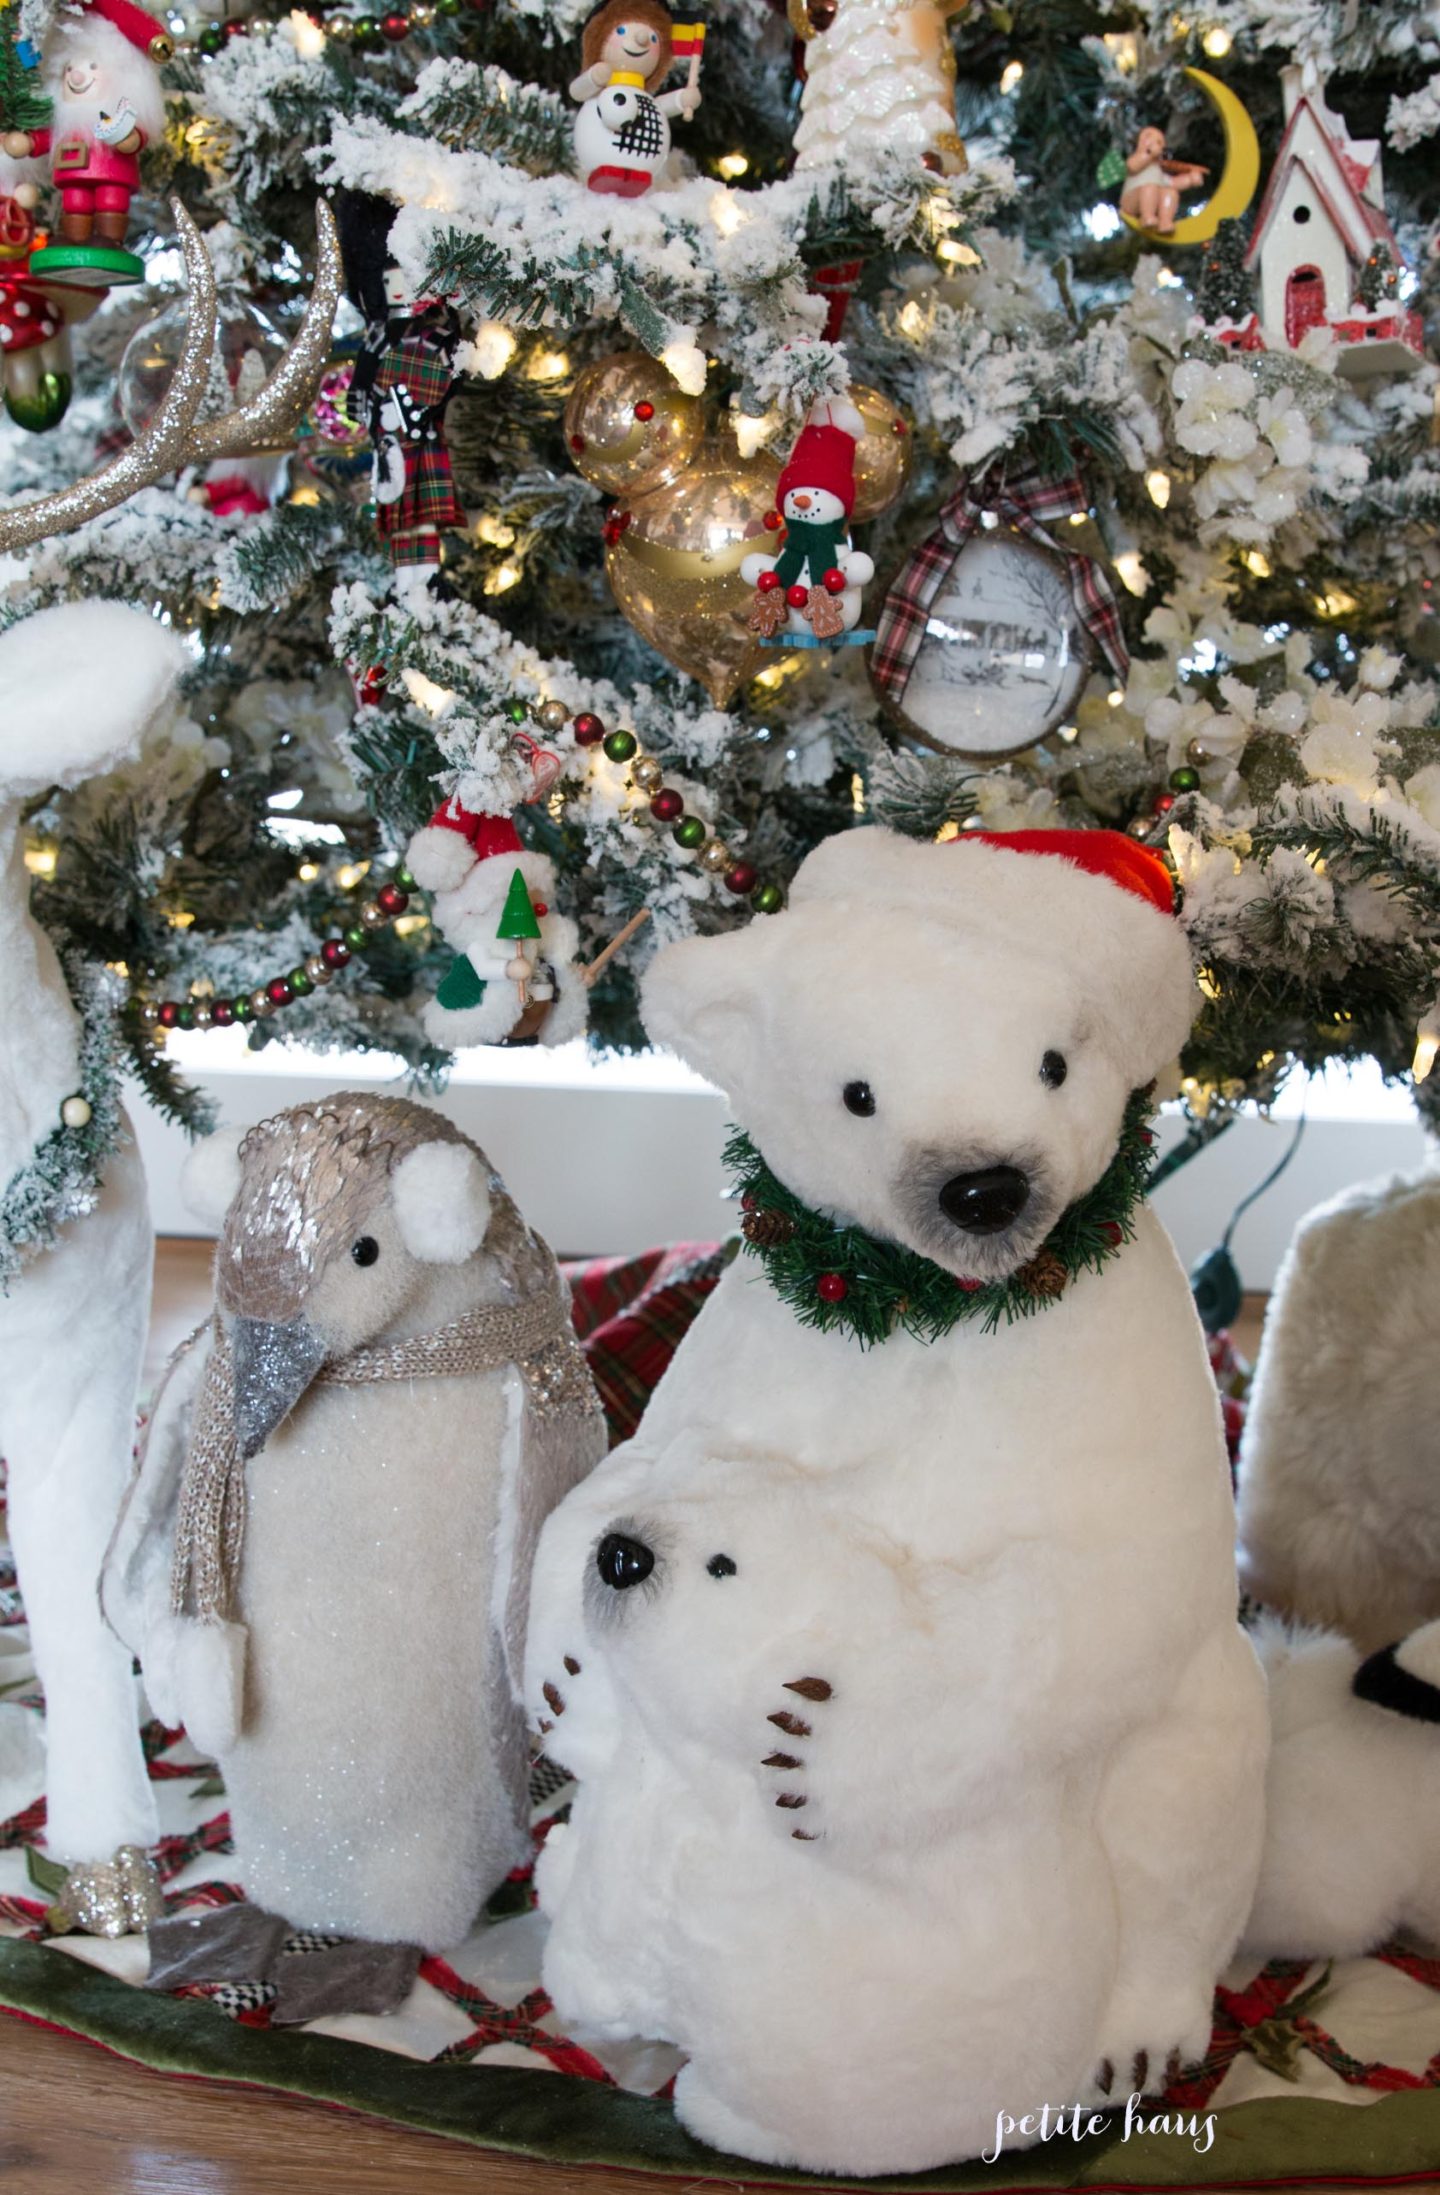 Flocked Christmas tree with arctic animals